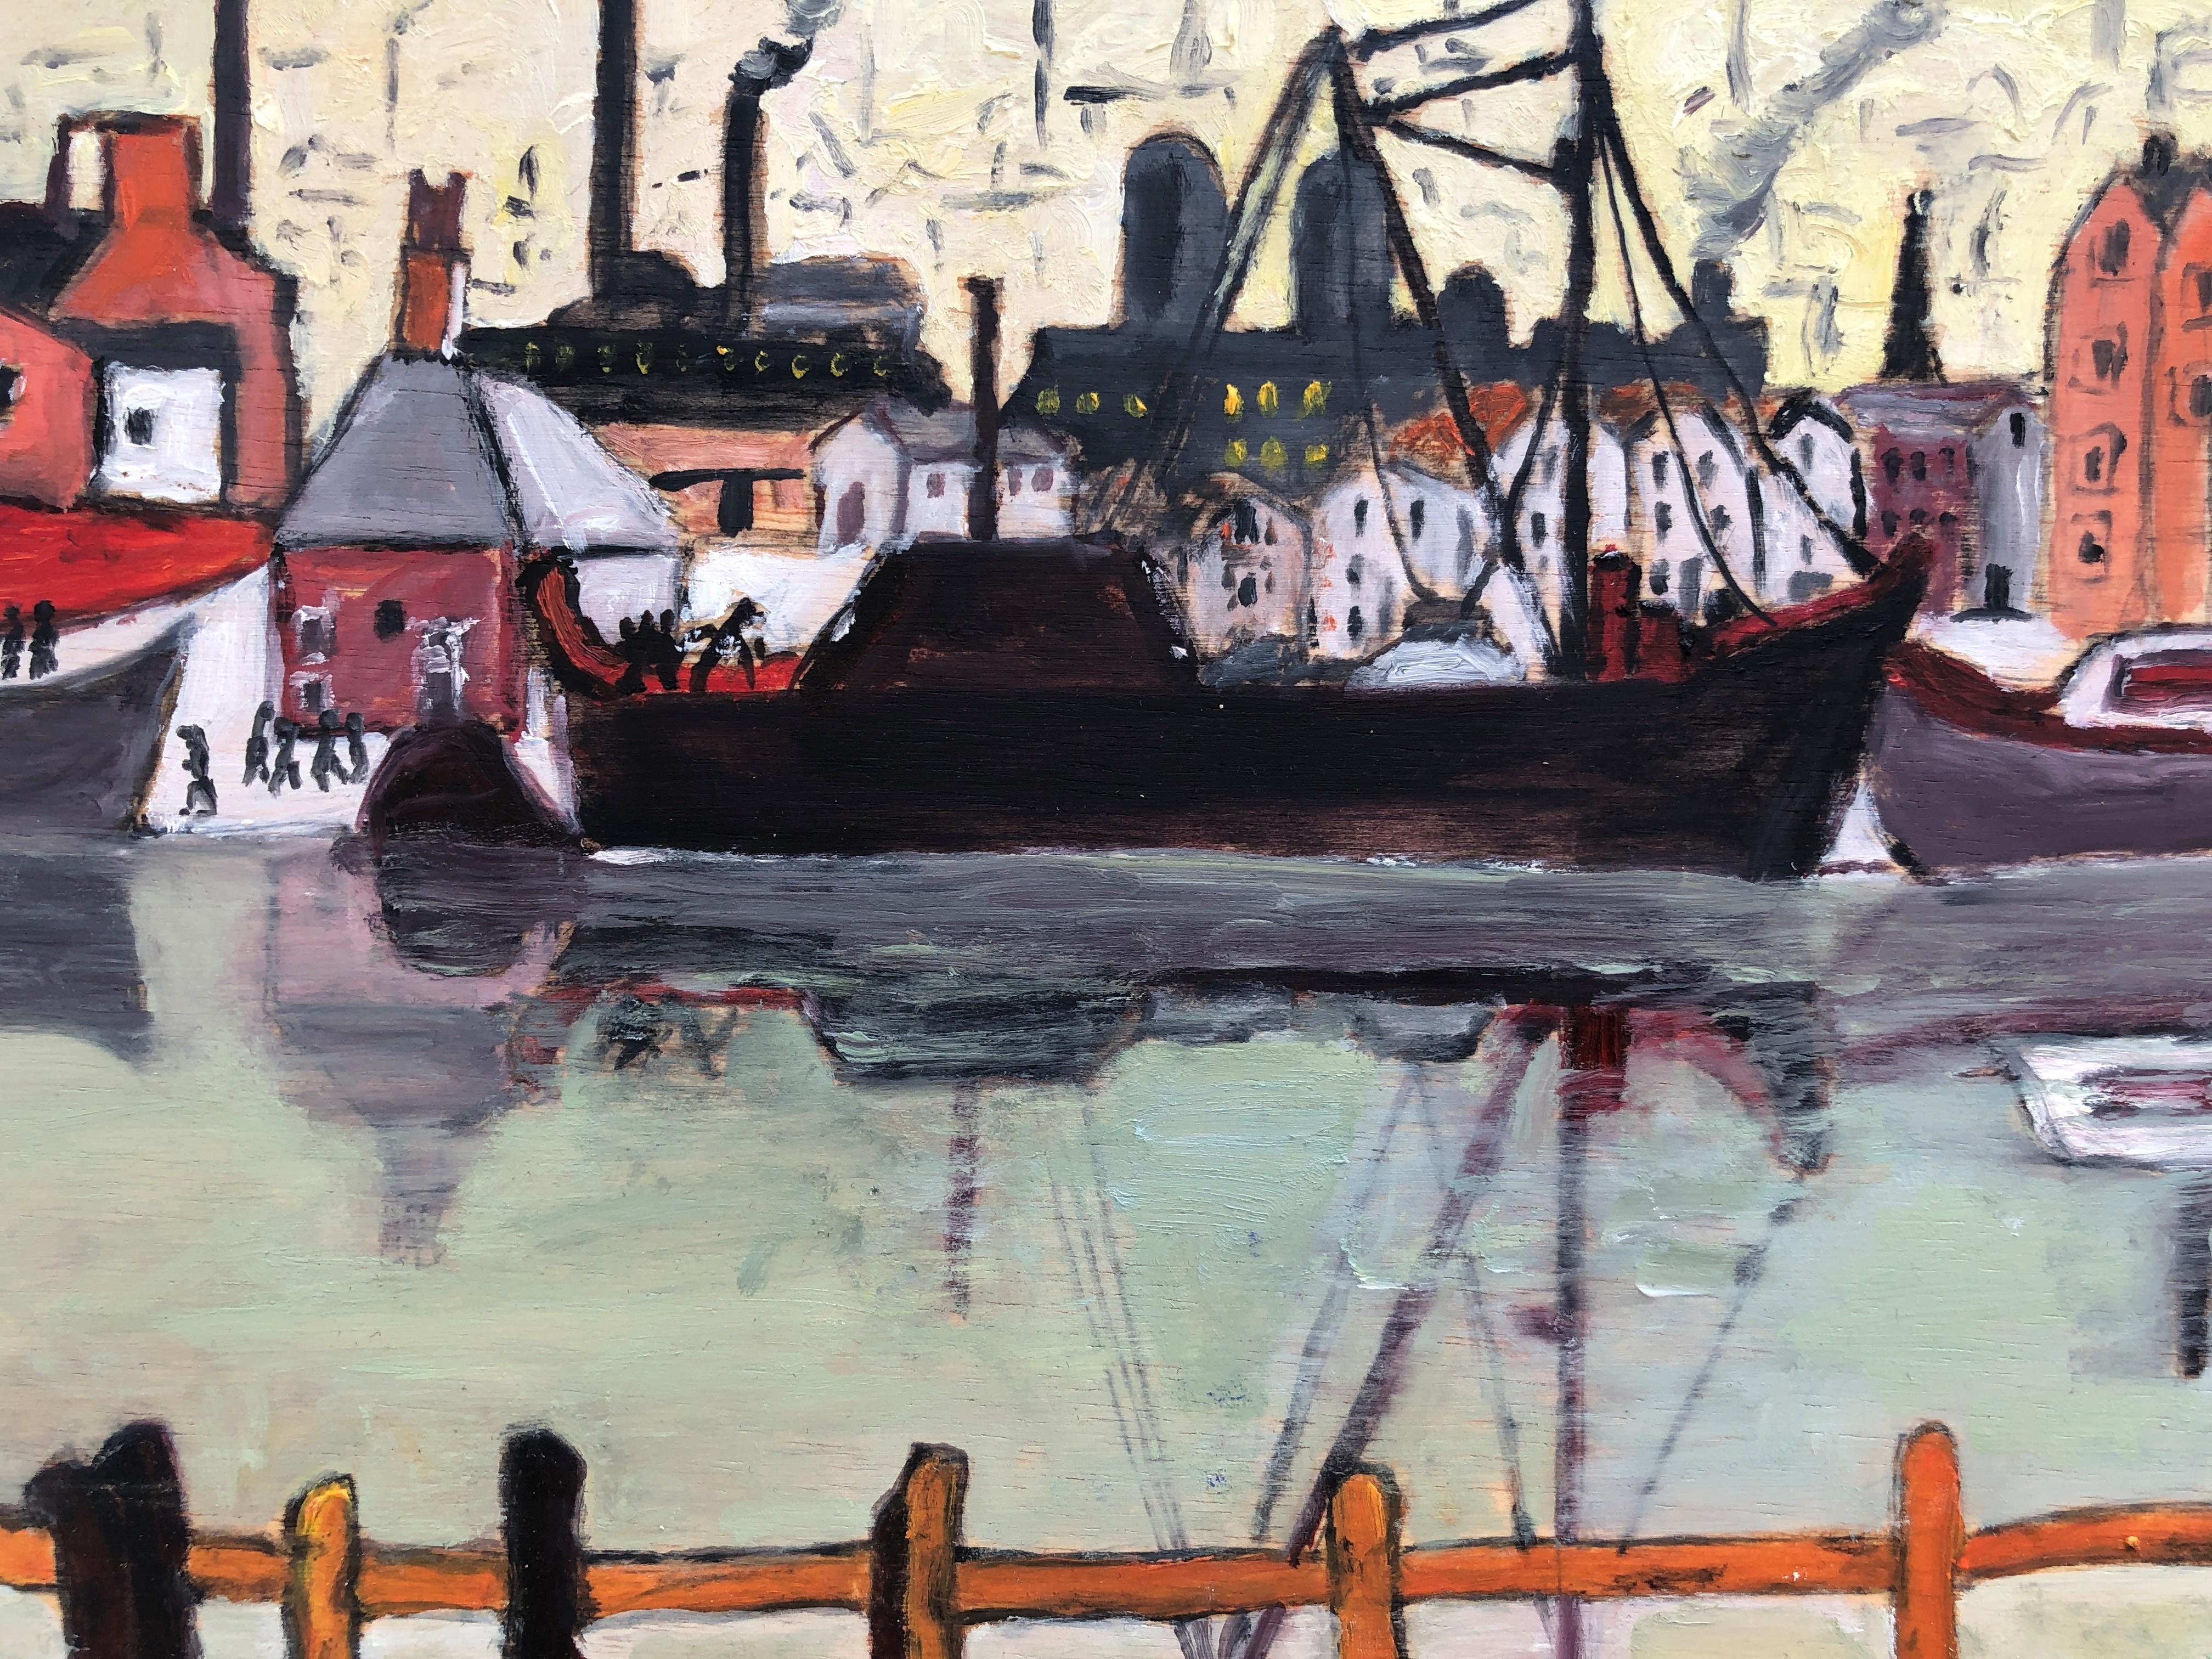 Industrial port, 1930s oil on board painting seascape - Brown Landscape Painting by Vladimir Ksieski